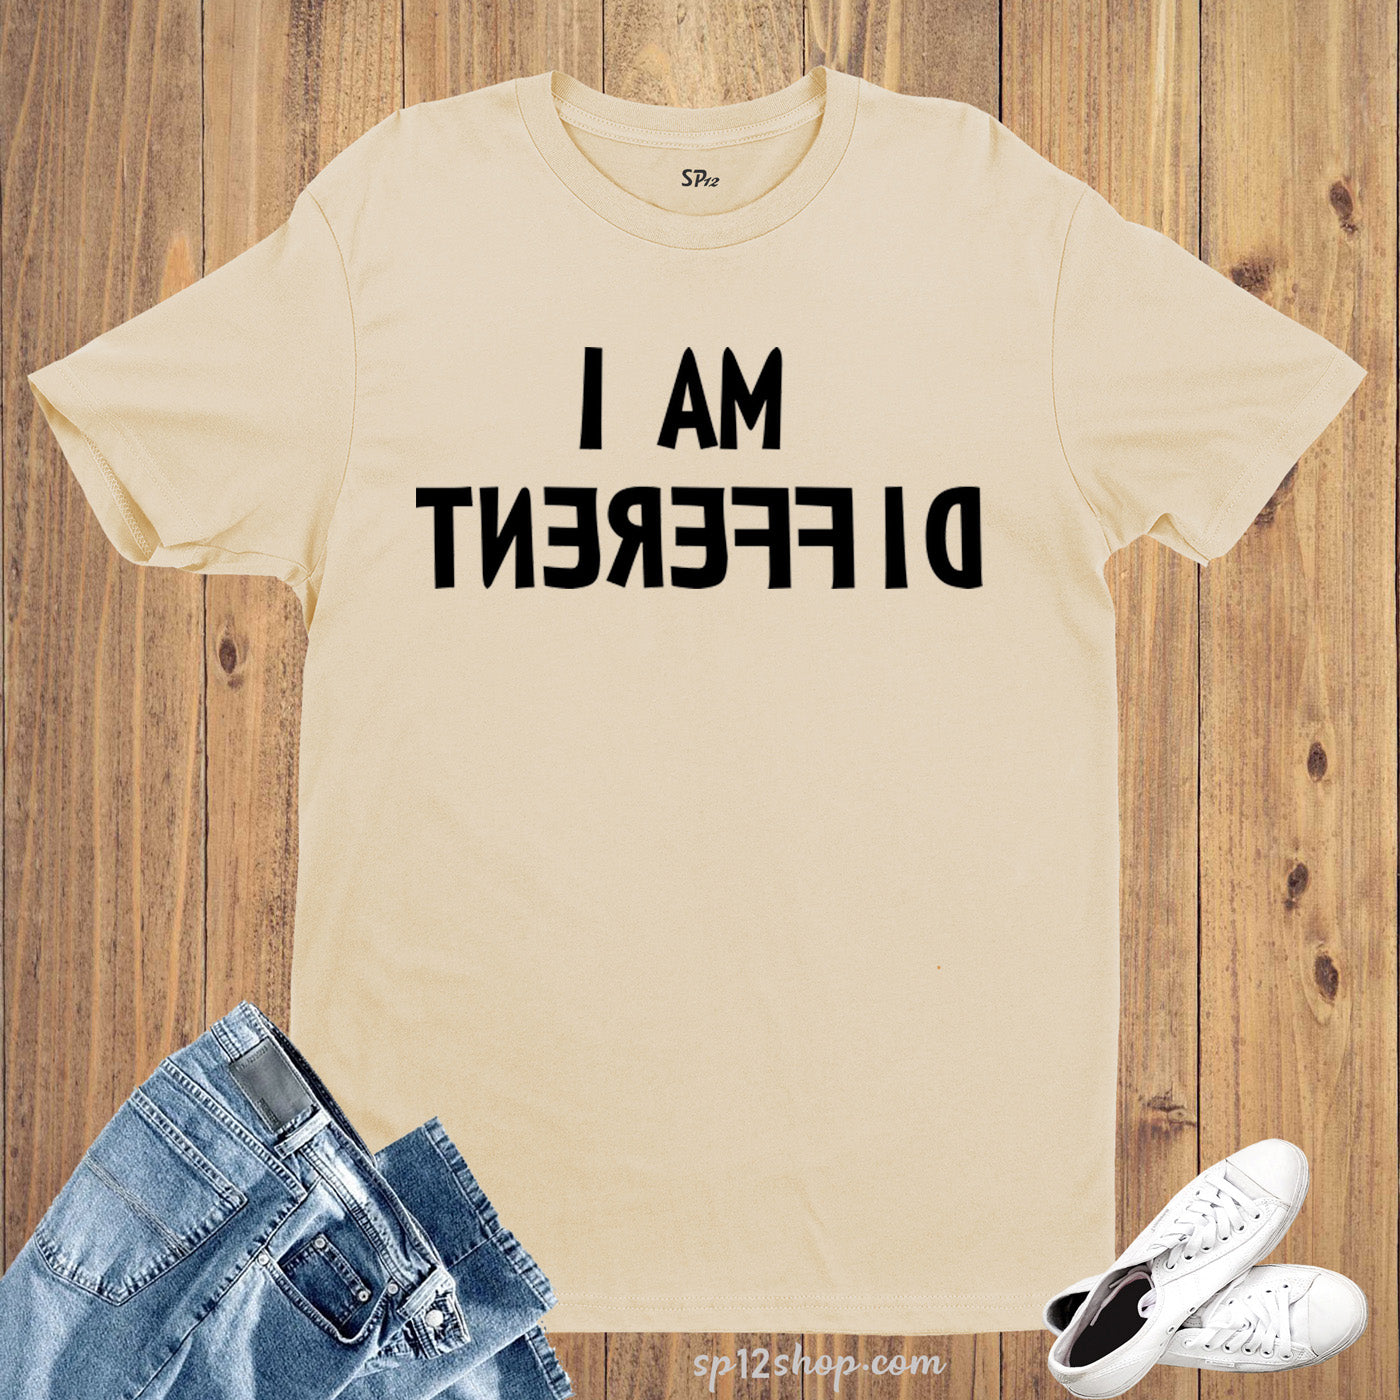 I am Different Social Selfie Funny Slogan T shirt